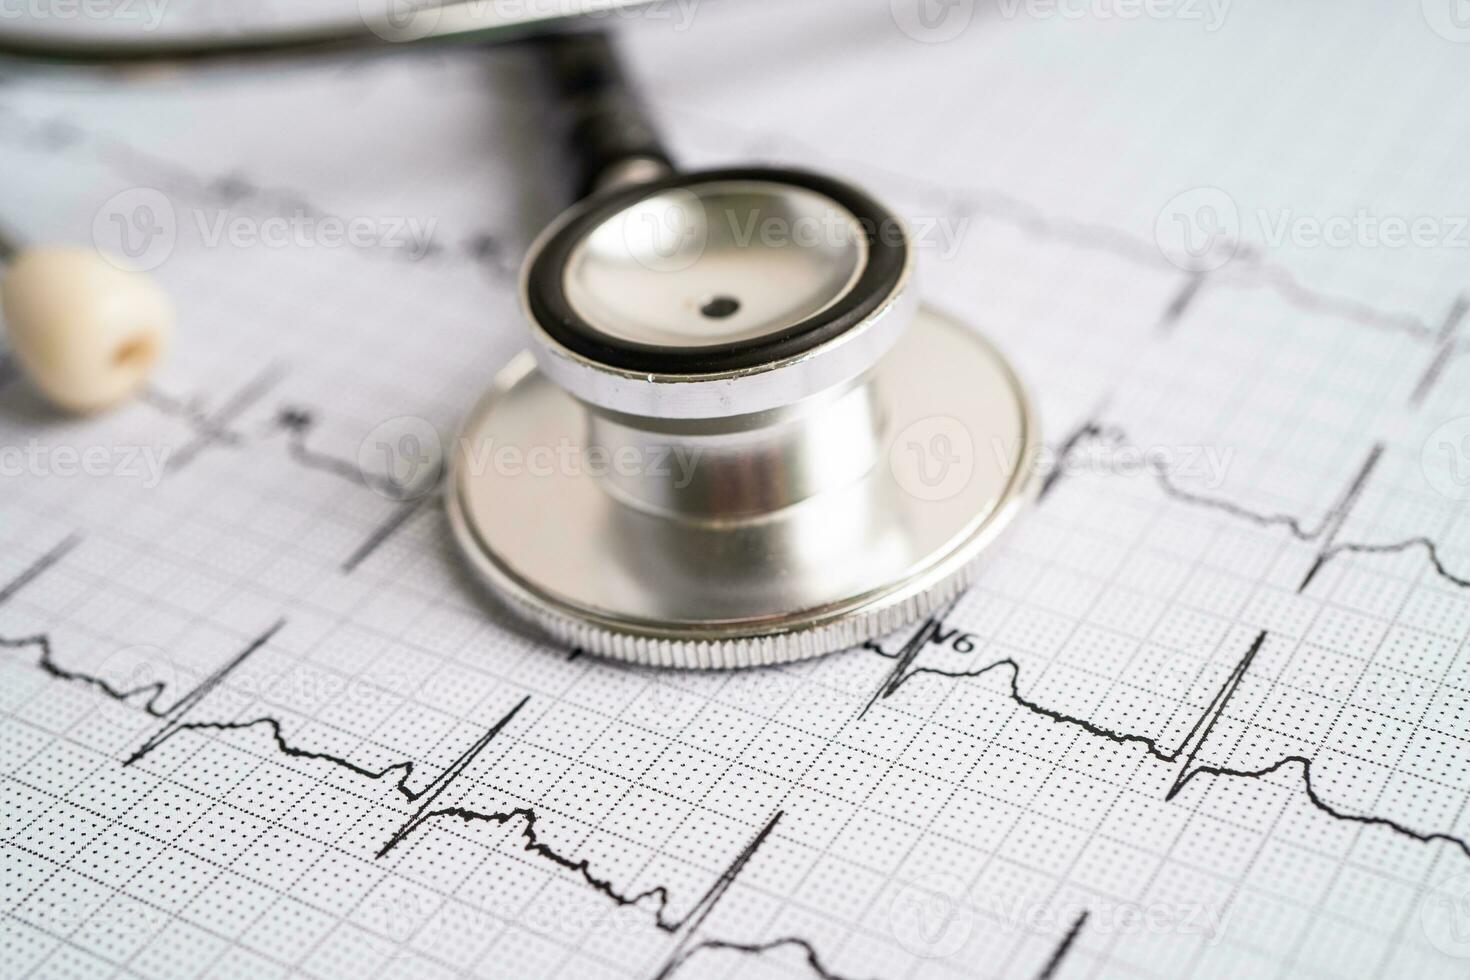 Stethoskop auf Elektrokardiogramm-EKG, Herzwelle, Herzinfarkt, Kardiogramm-Bericht. foto